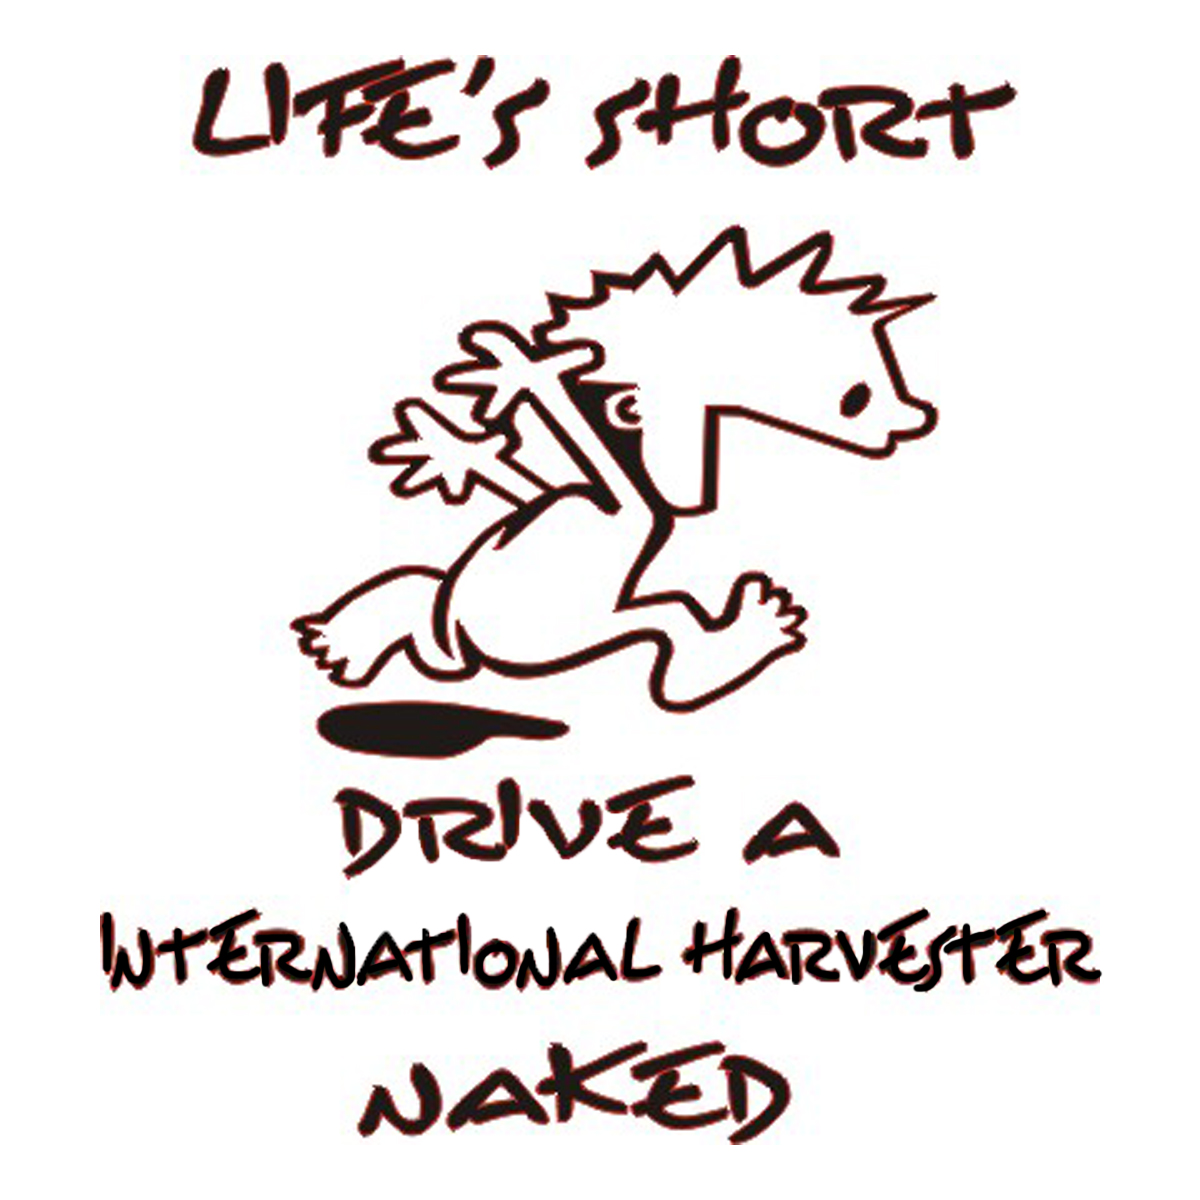 Lifes Short, Drive a Internaional Harvester Naked Sticker